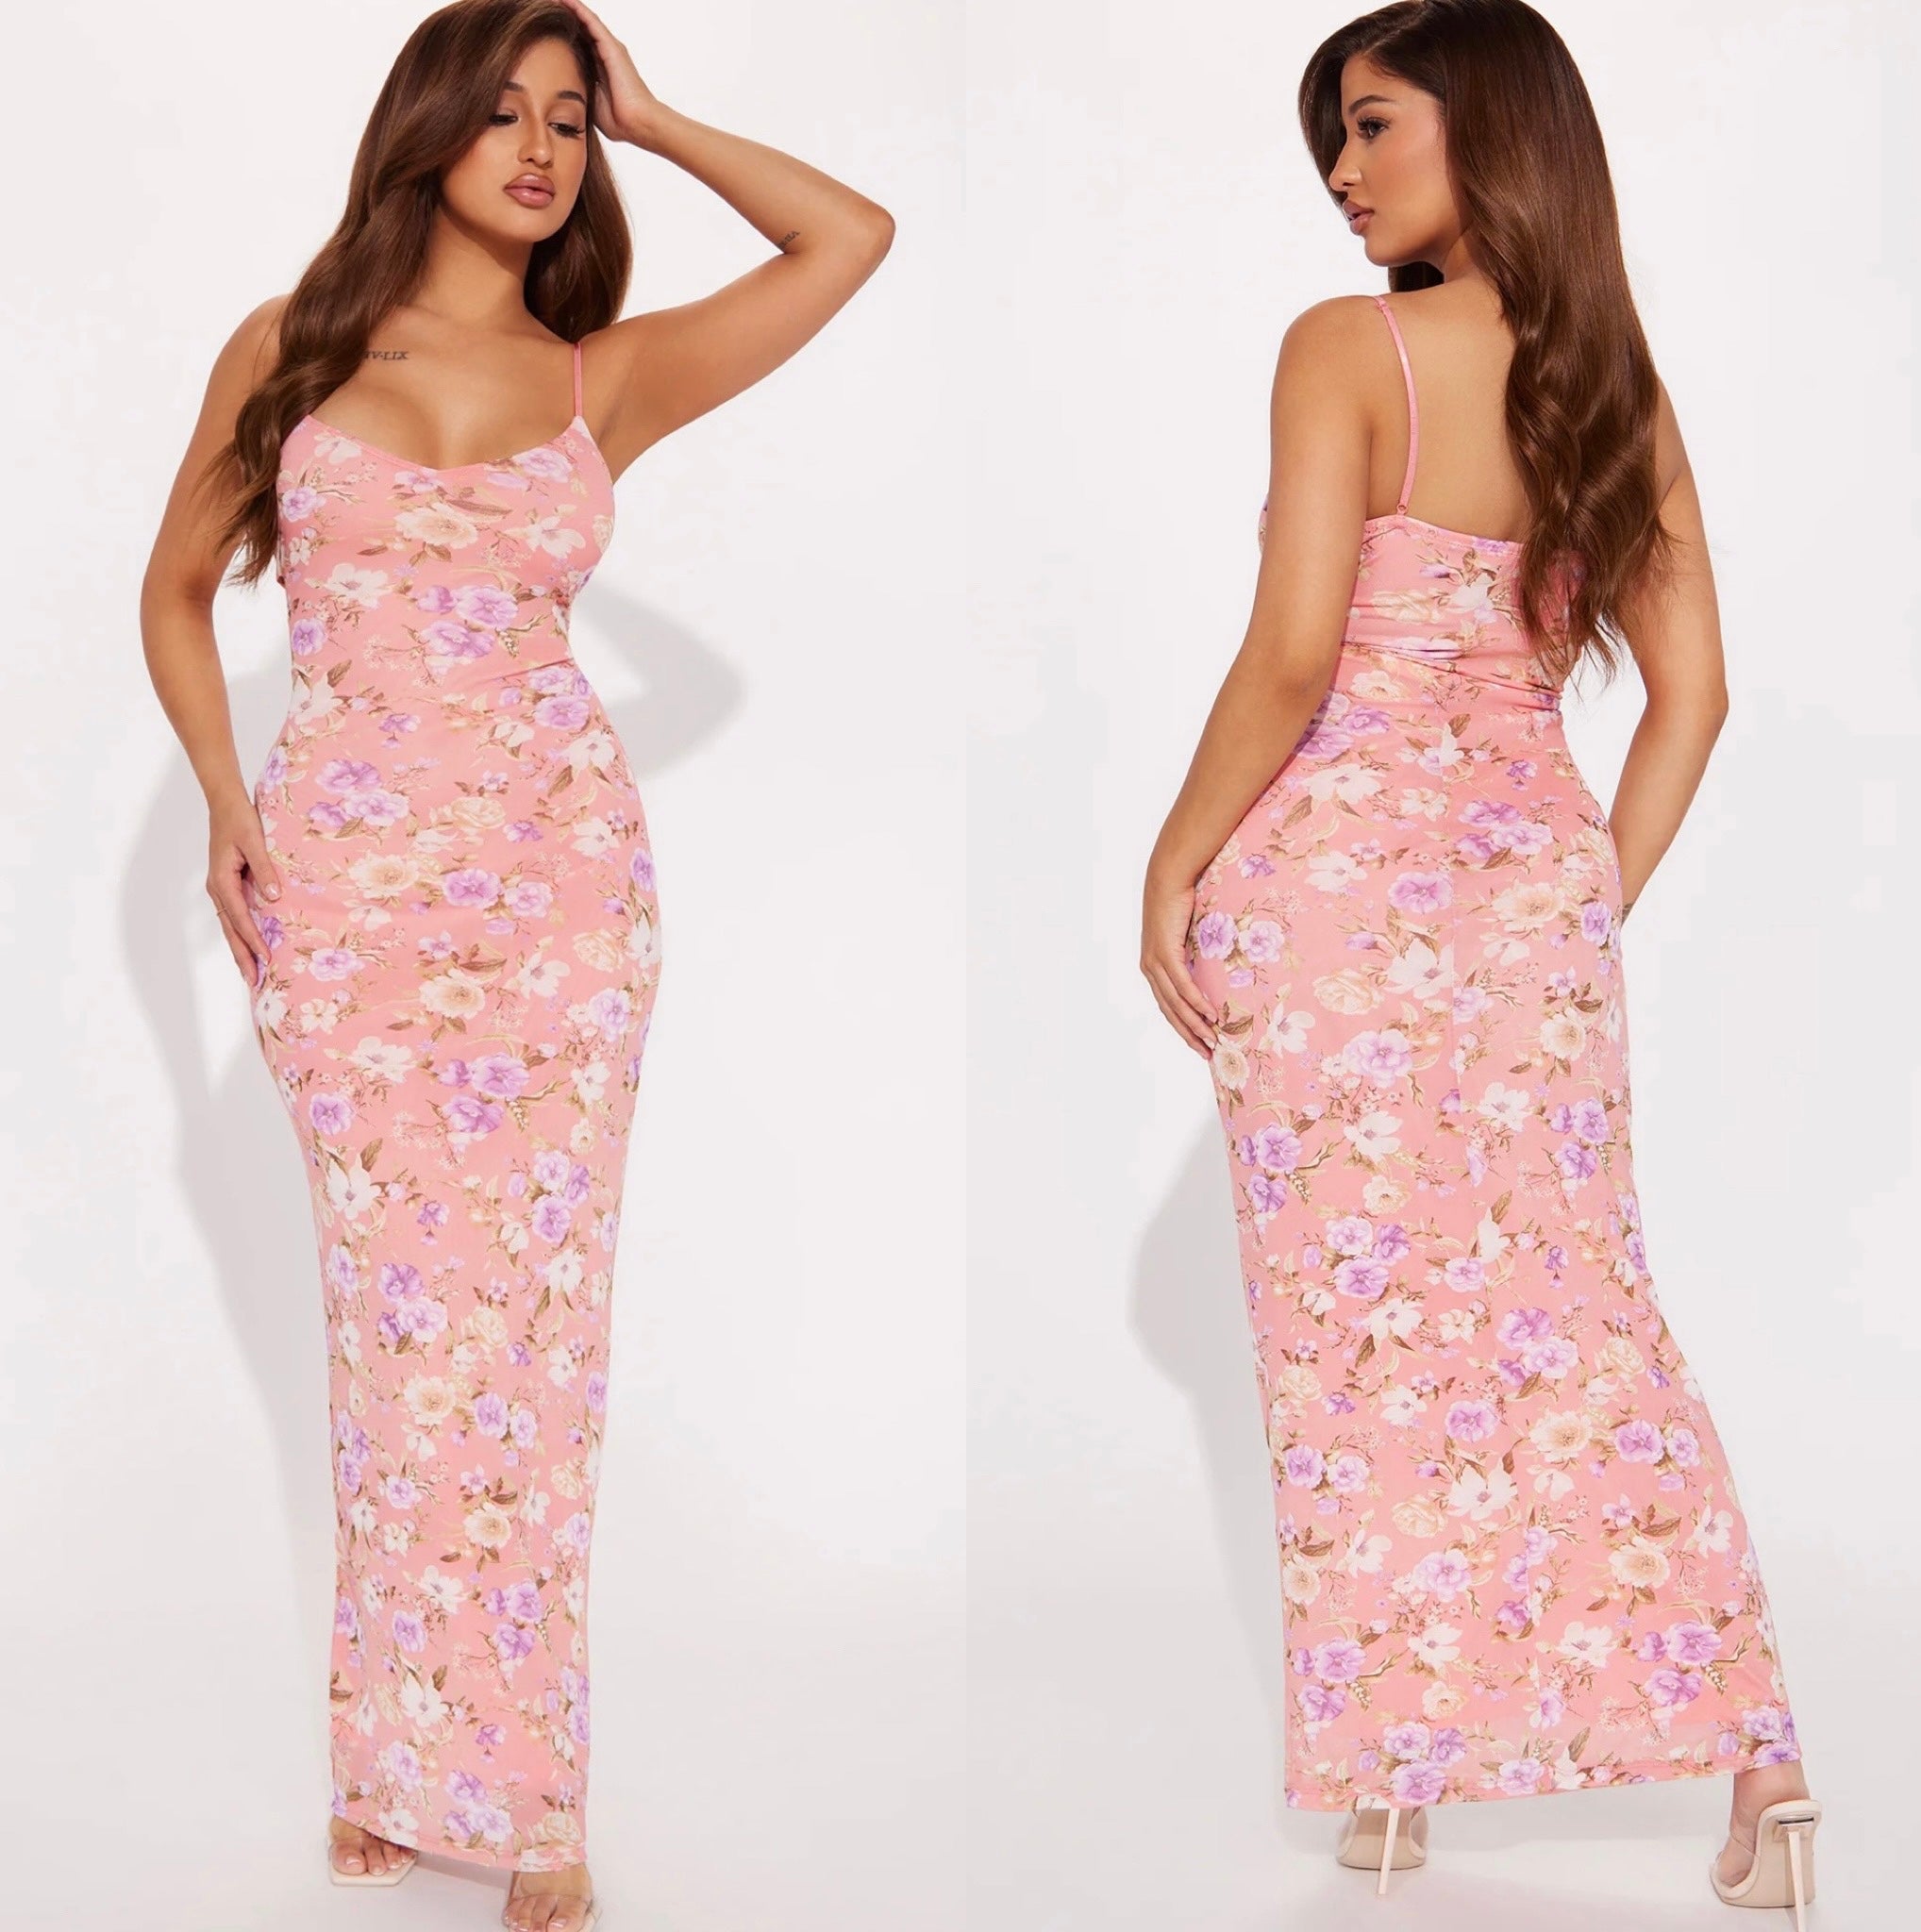 The “Jasmine” Maxi Dress In Blush